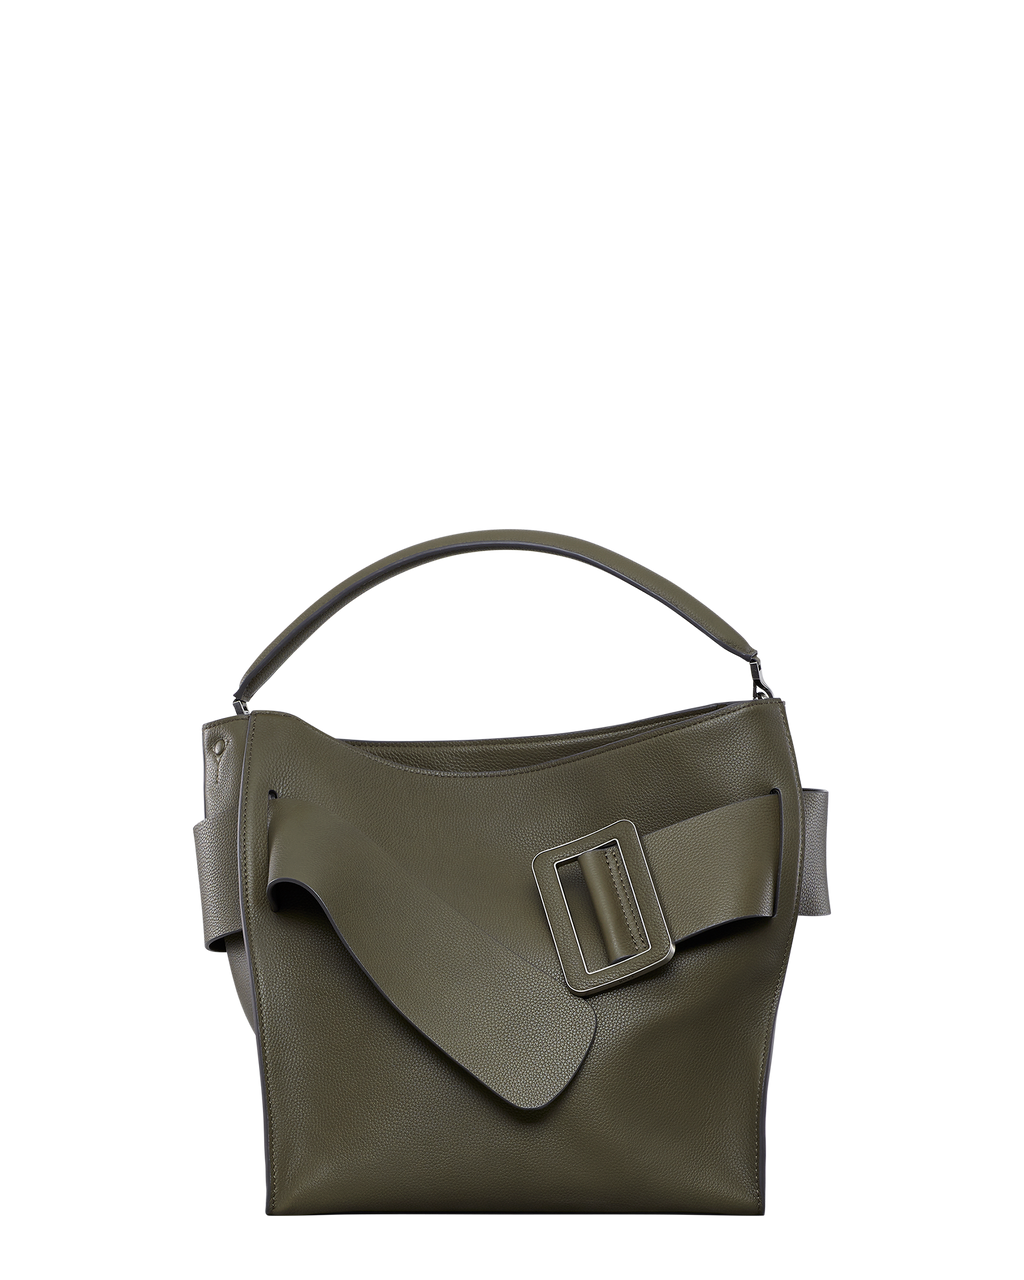 Boyy handles bag - Black Handle Bags, Handbags - WB621230